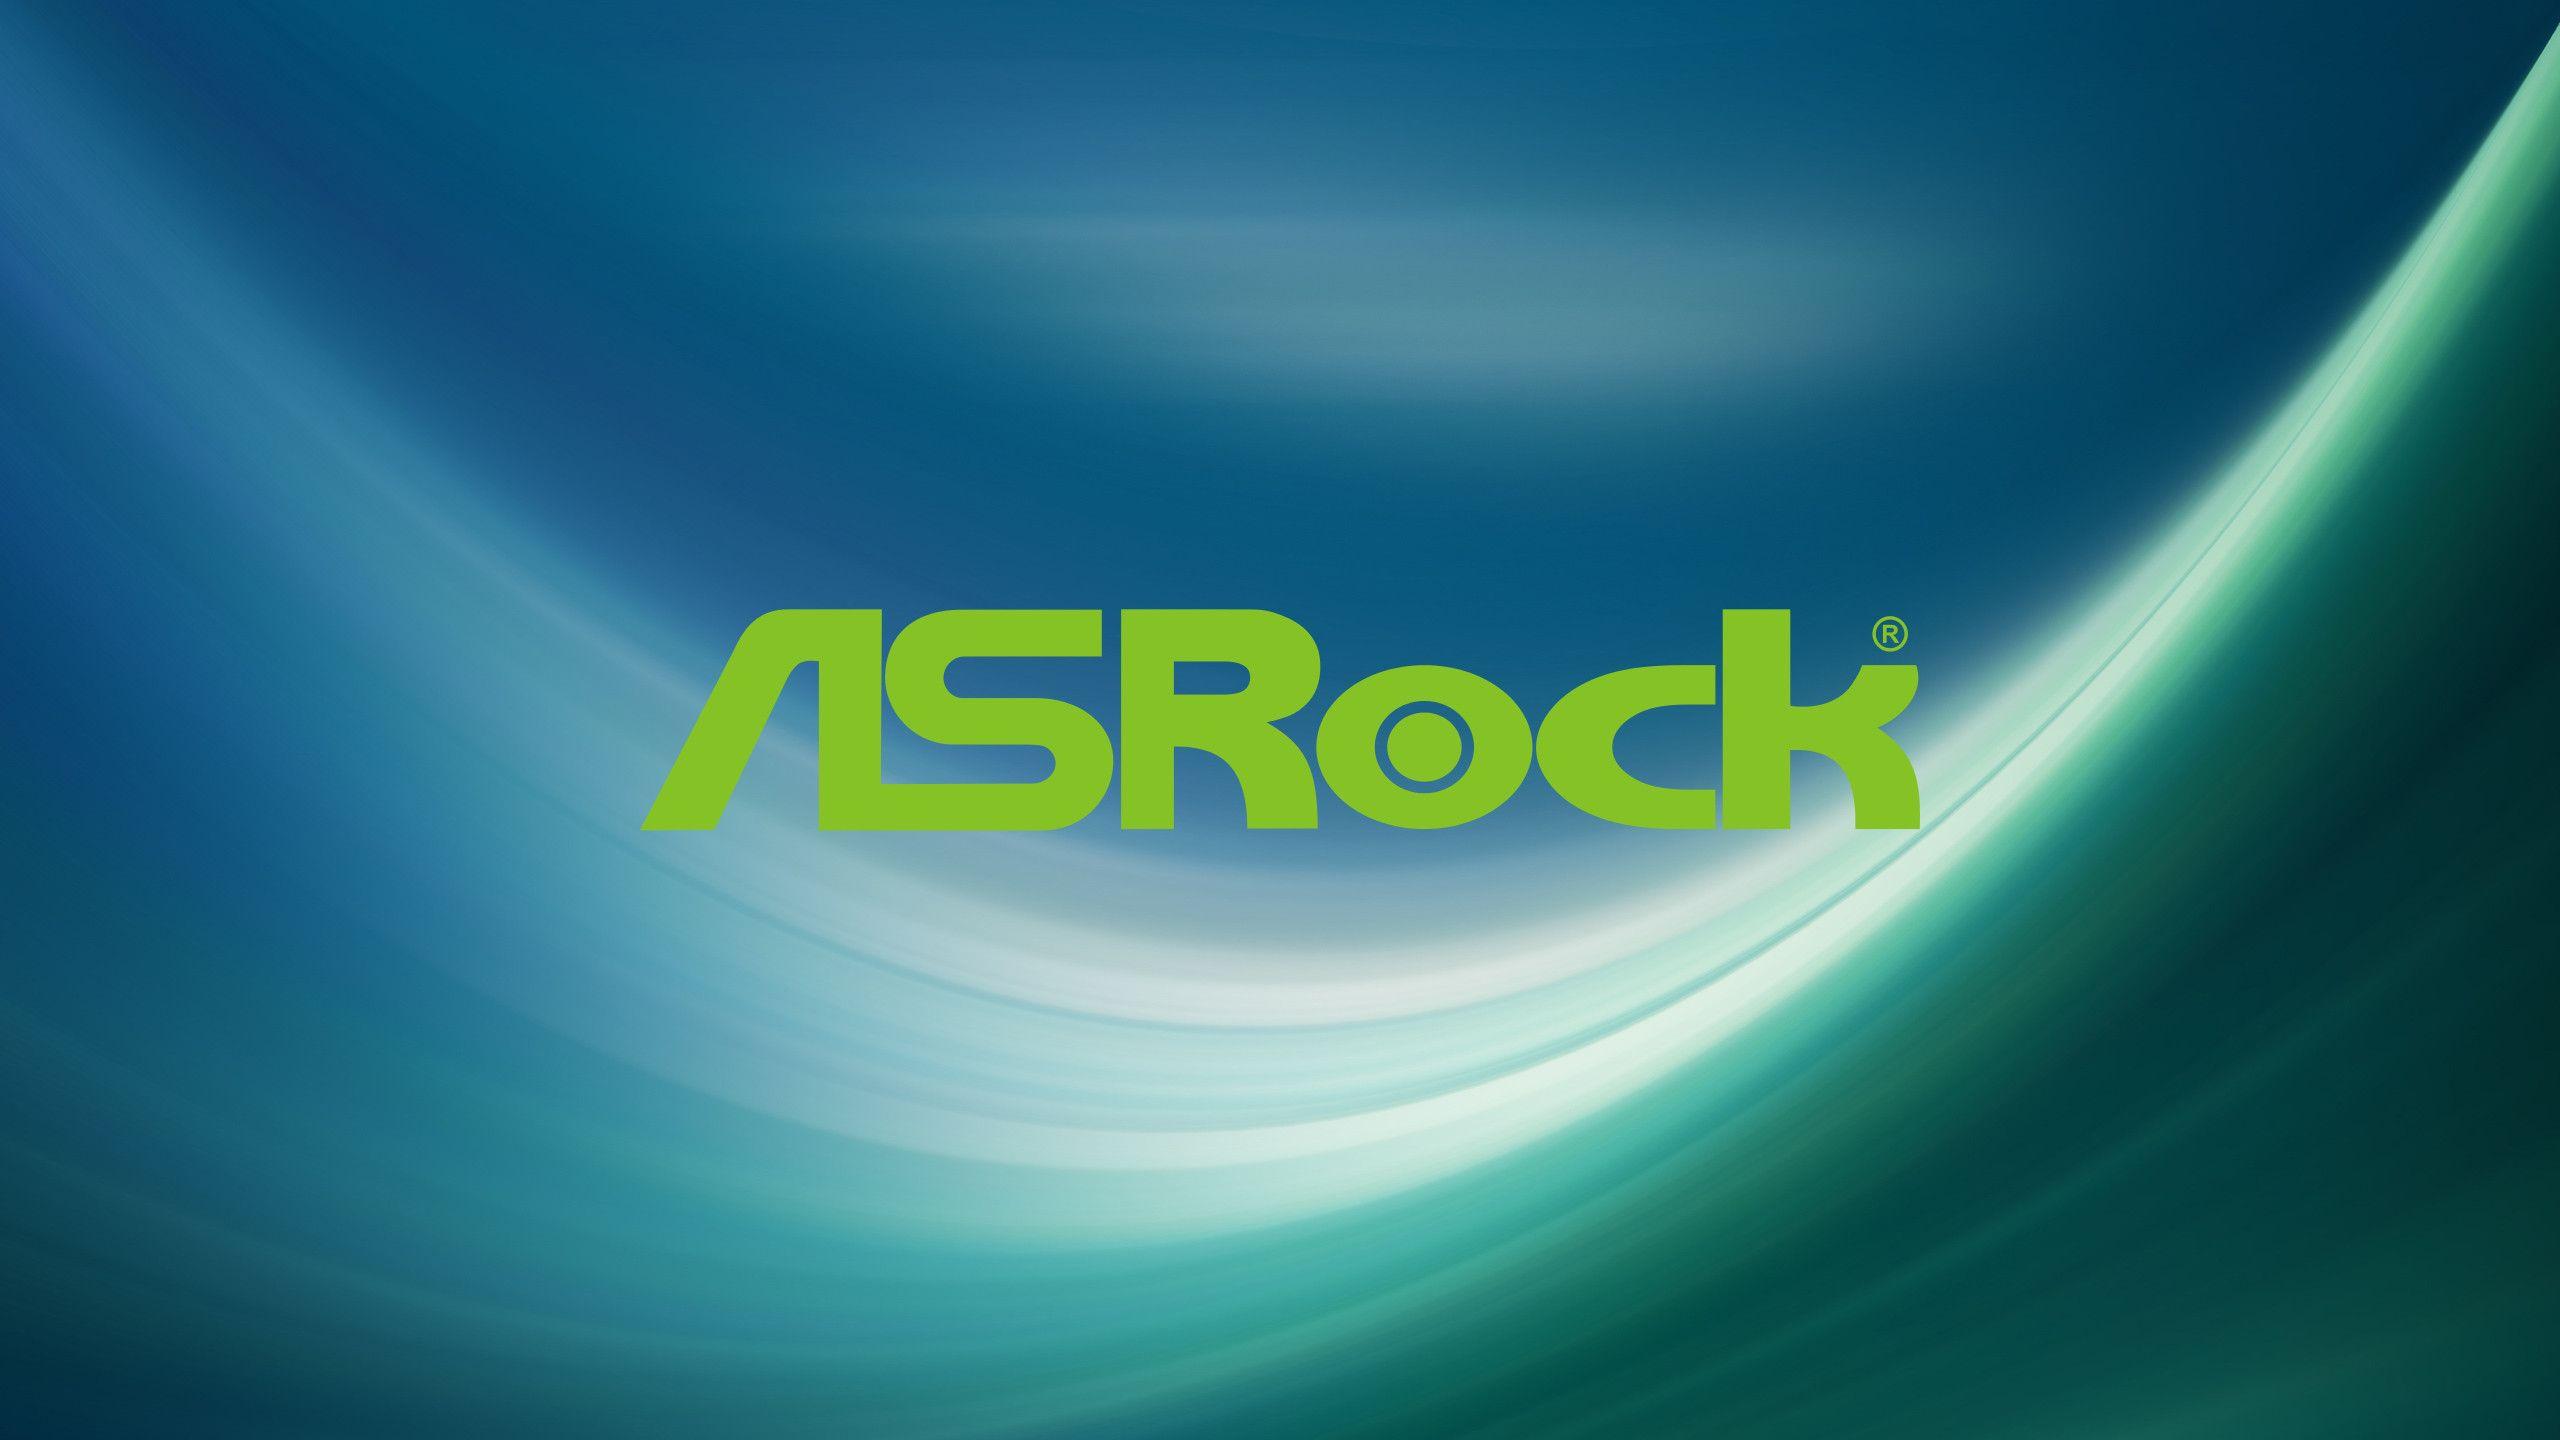 Asrock Wallpapers Top Free Asrock Backgrounds Wallpaperaccess